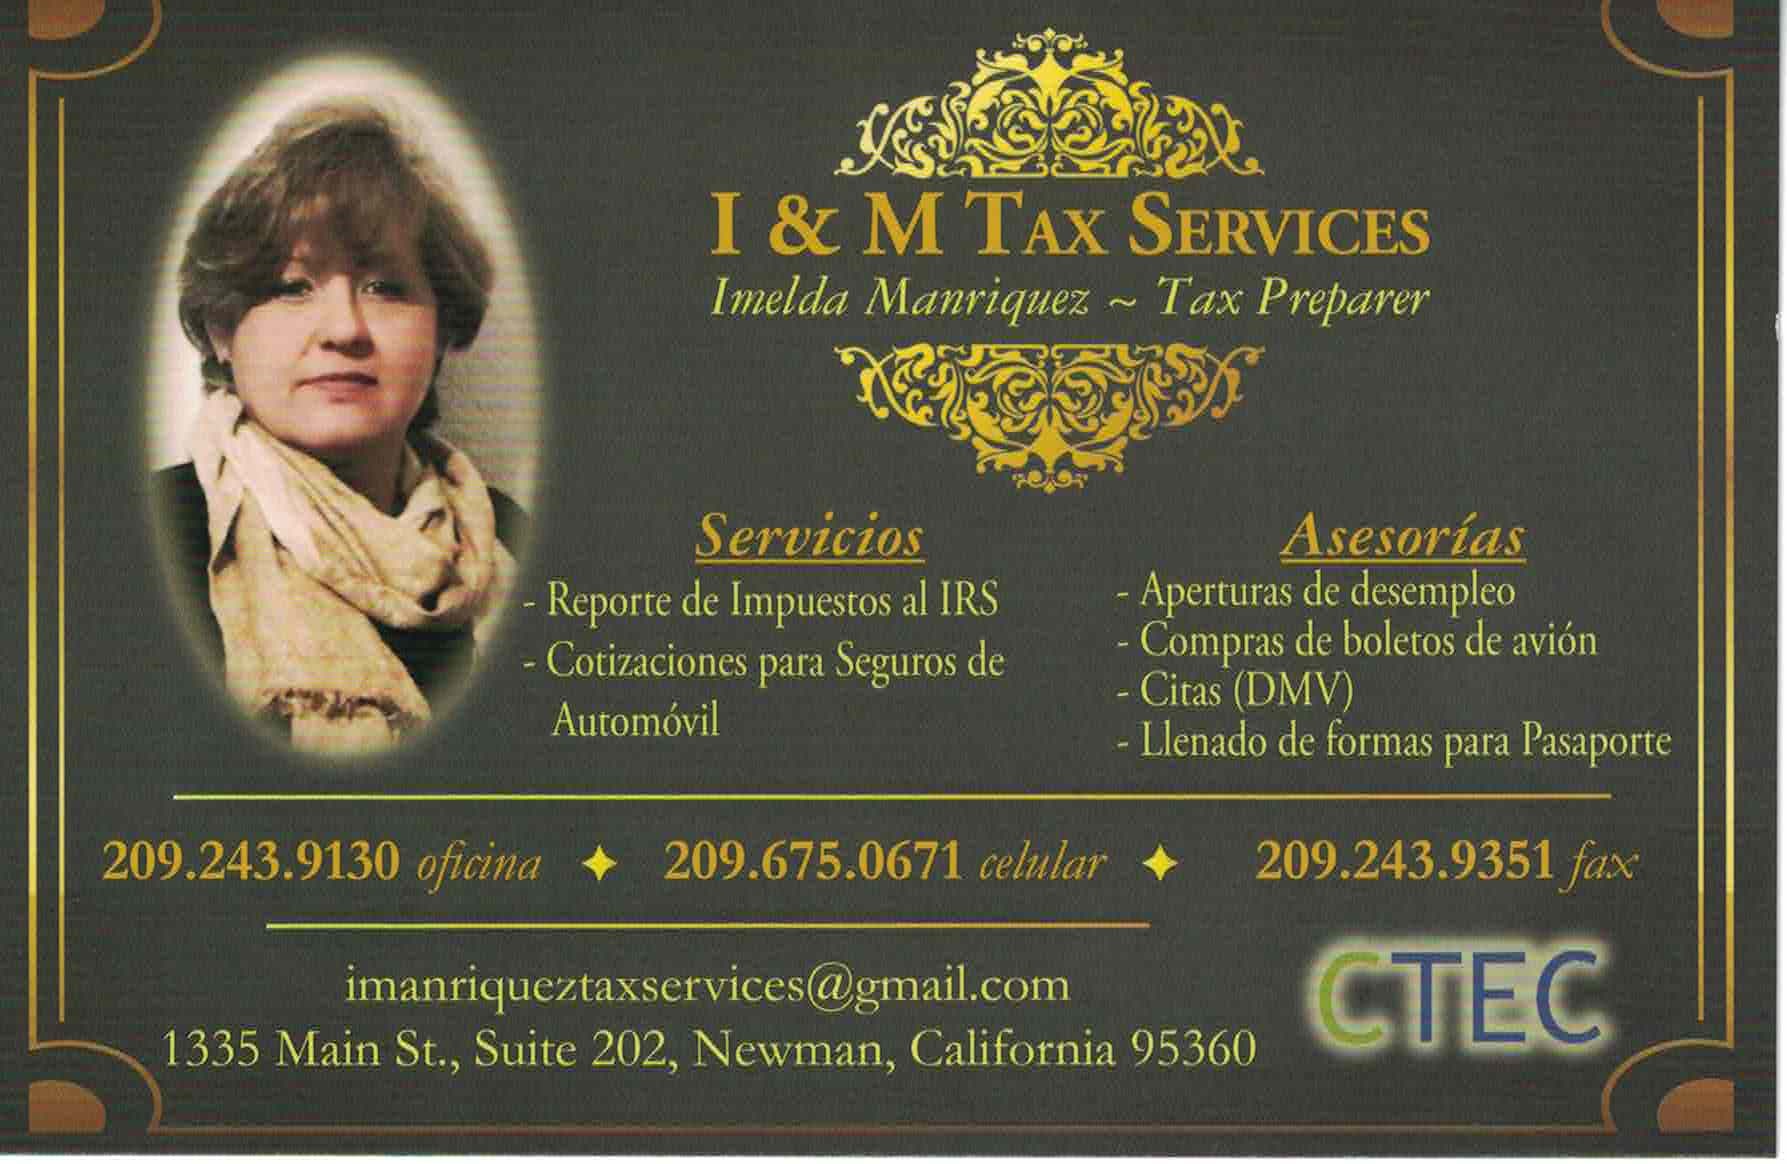 I & M Tax Services LLC 1306 Main St, Newman California 95360